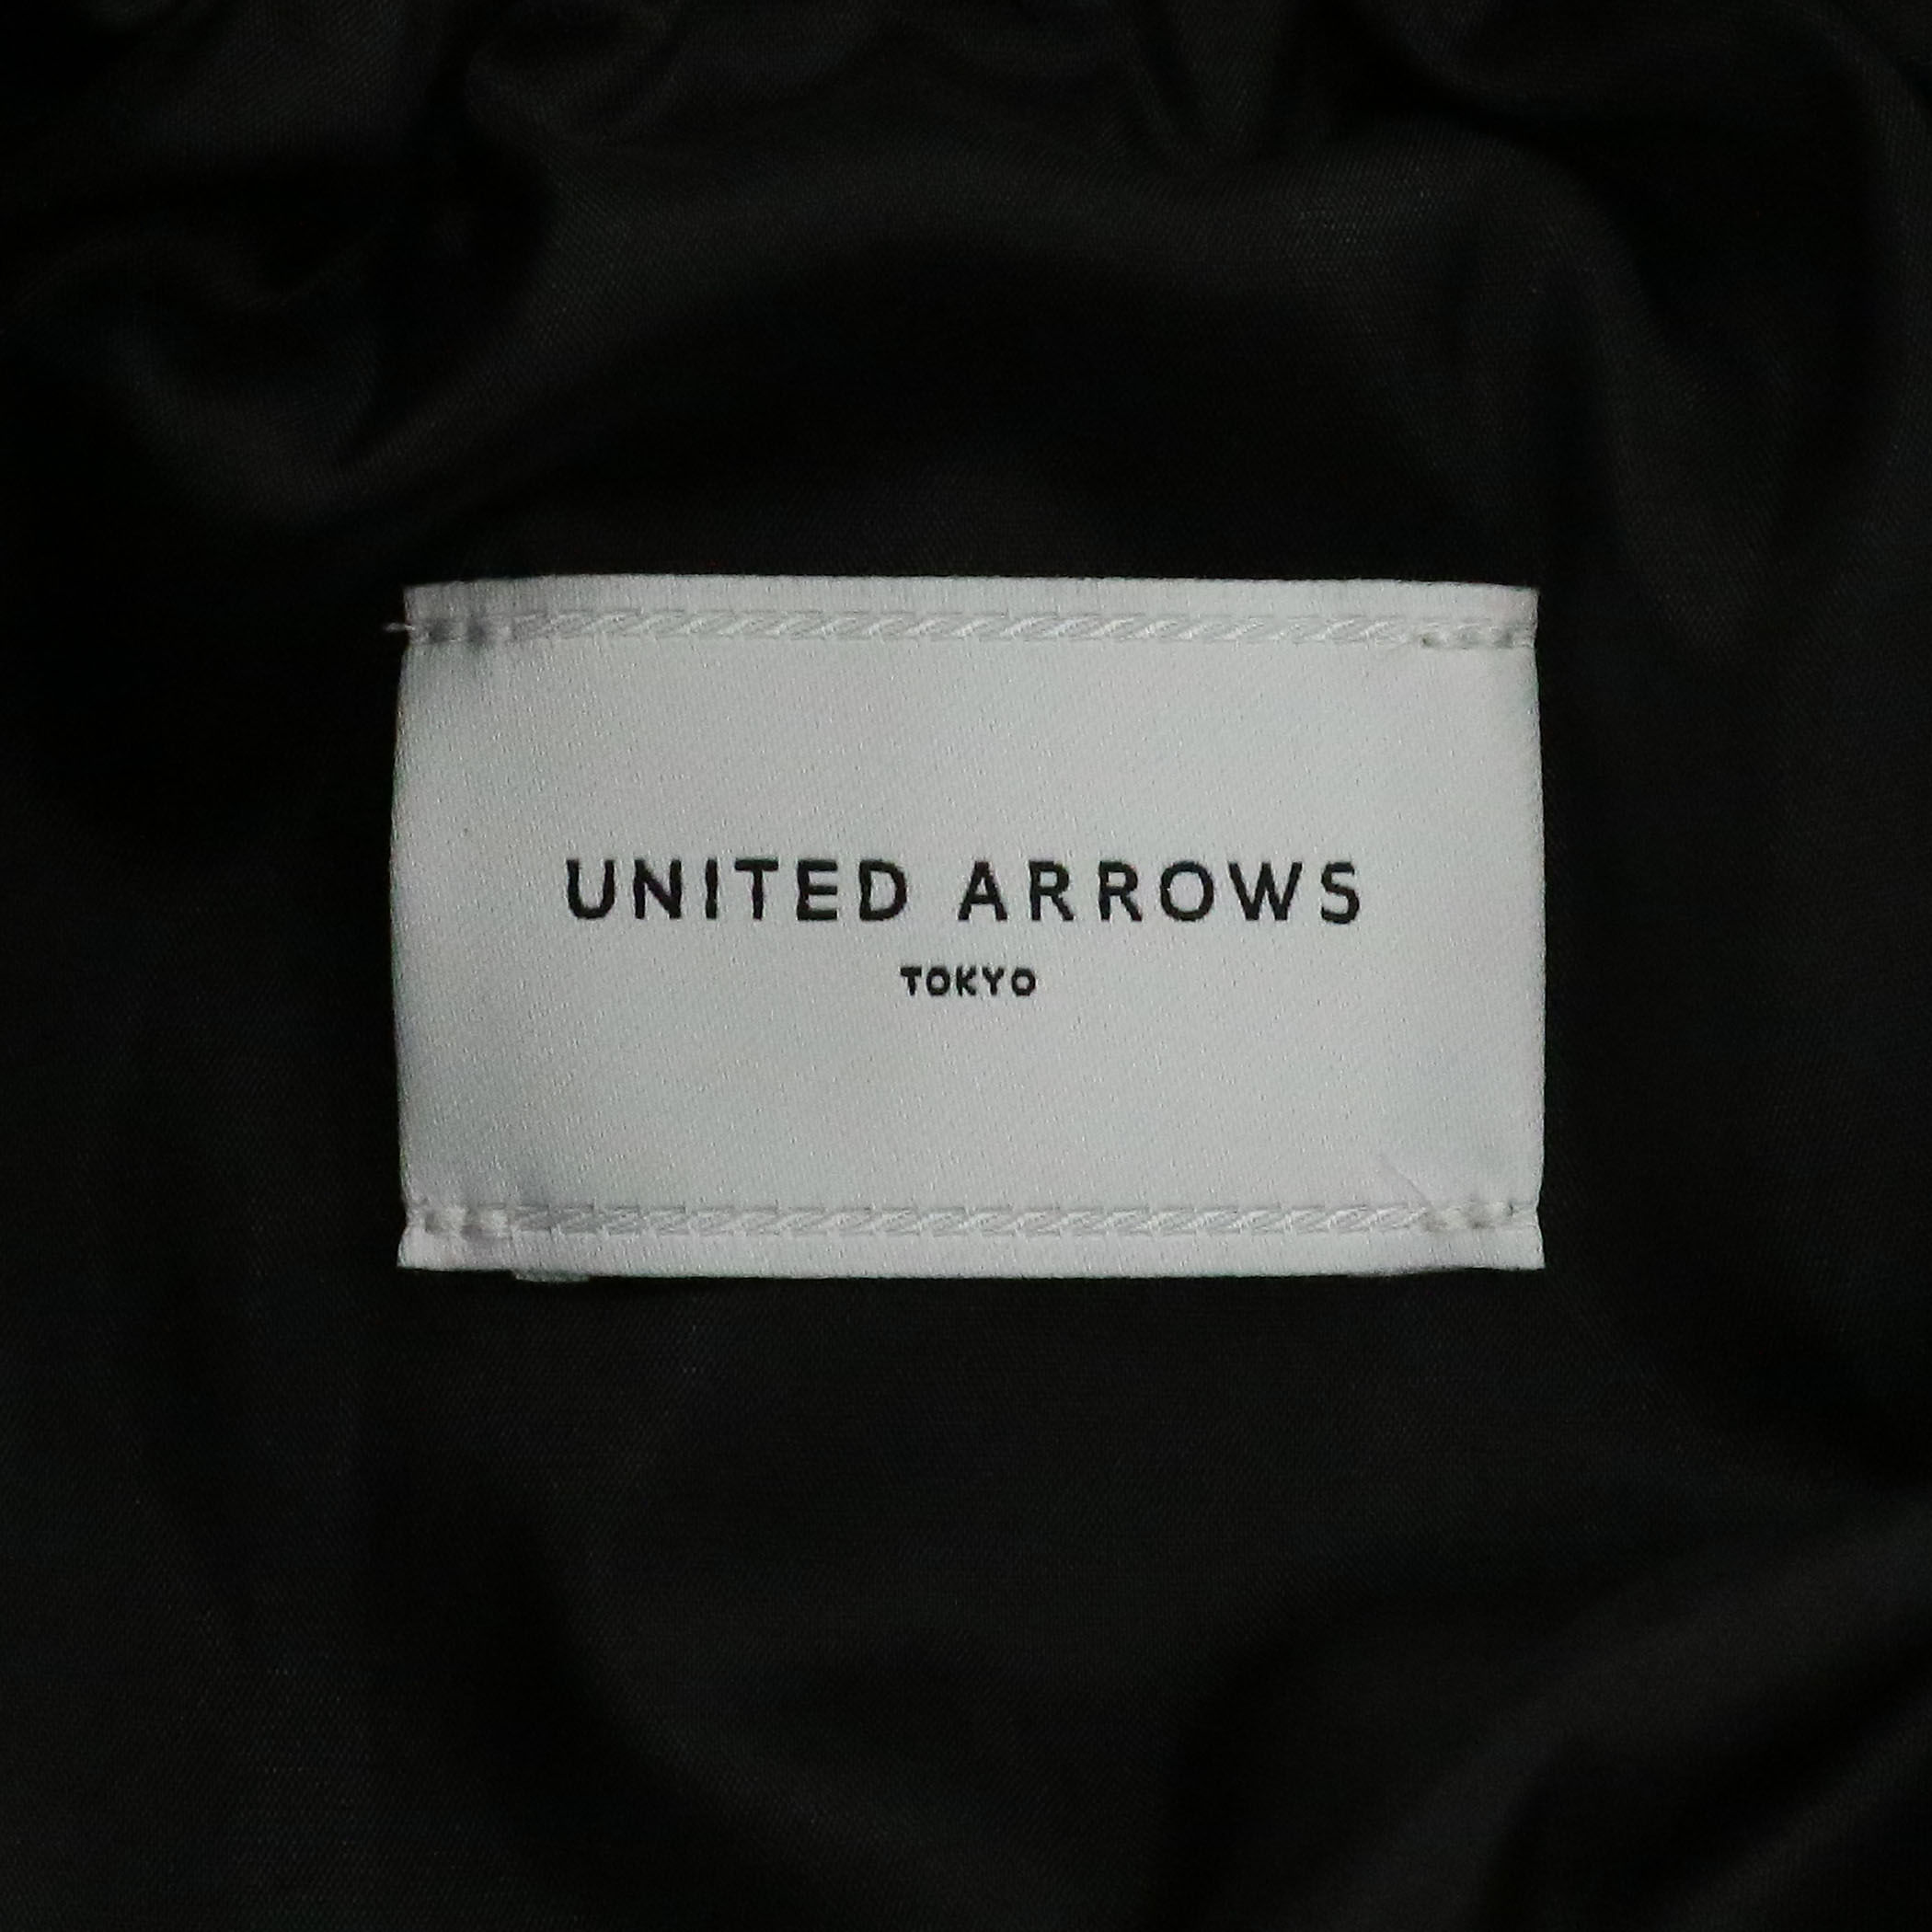 UNITED ARROWS
チェック タフタ フレア スカート
￥19,800